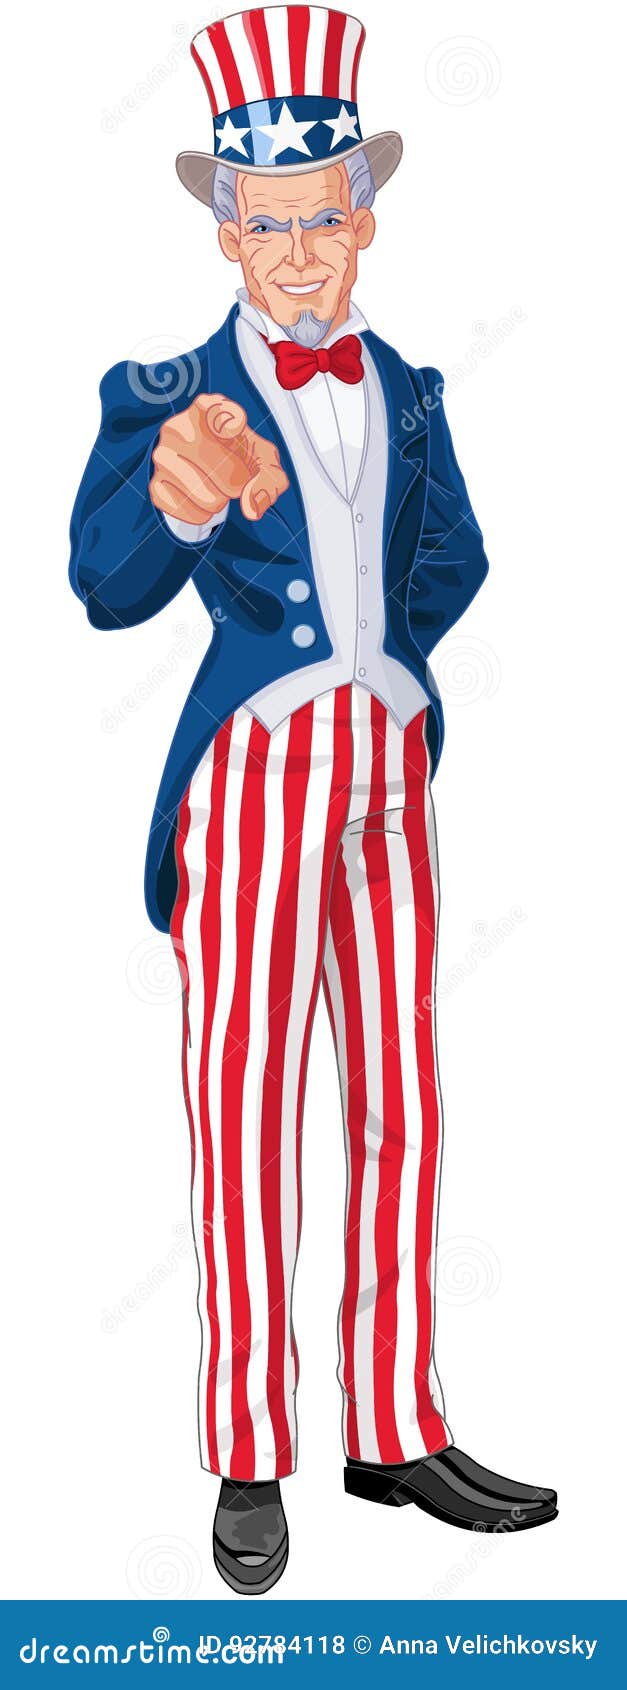 Uncle Sam Wants You Vector Illustration Cartoondealer Com